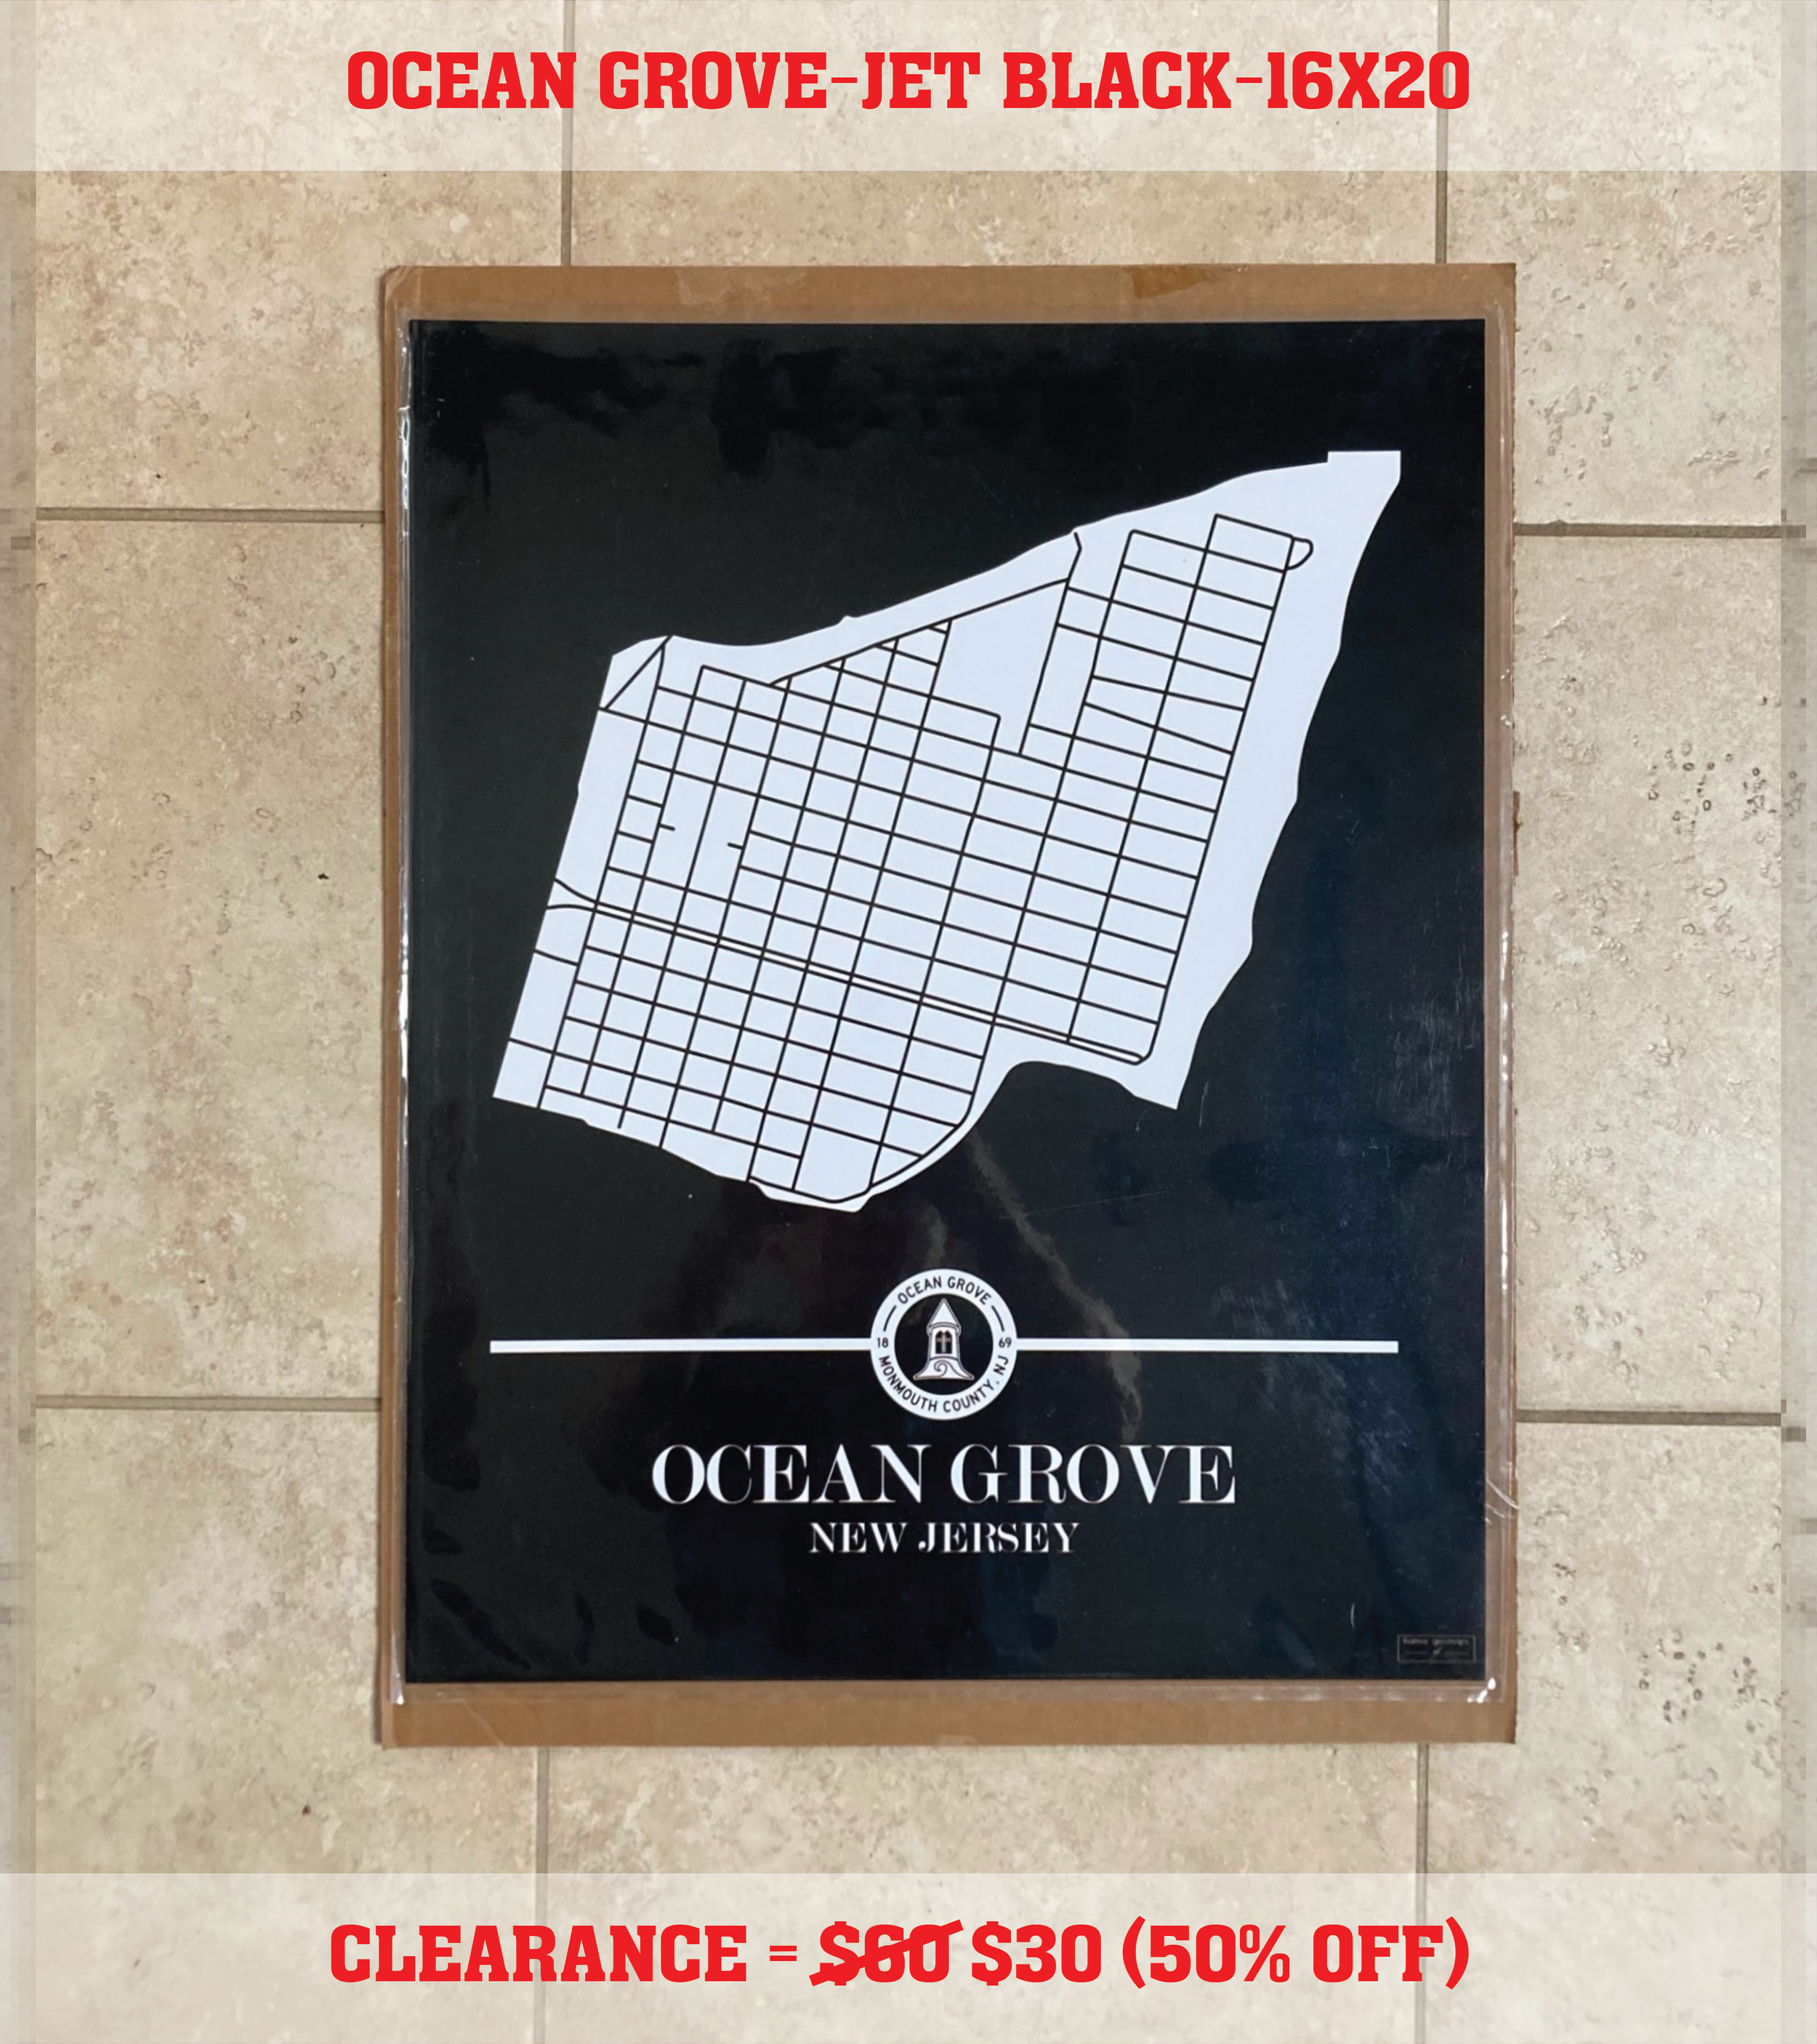 Ocean Grove (16x20) Jet Black